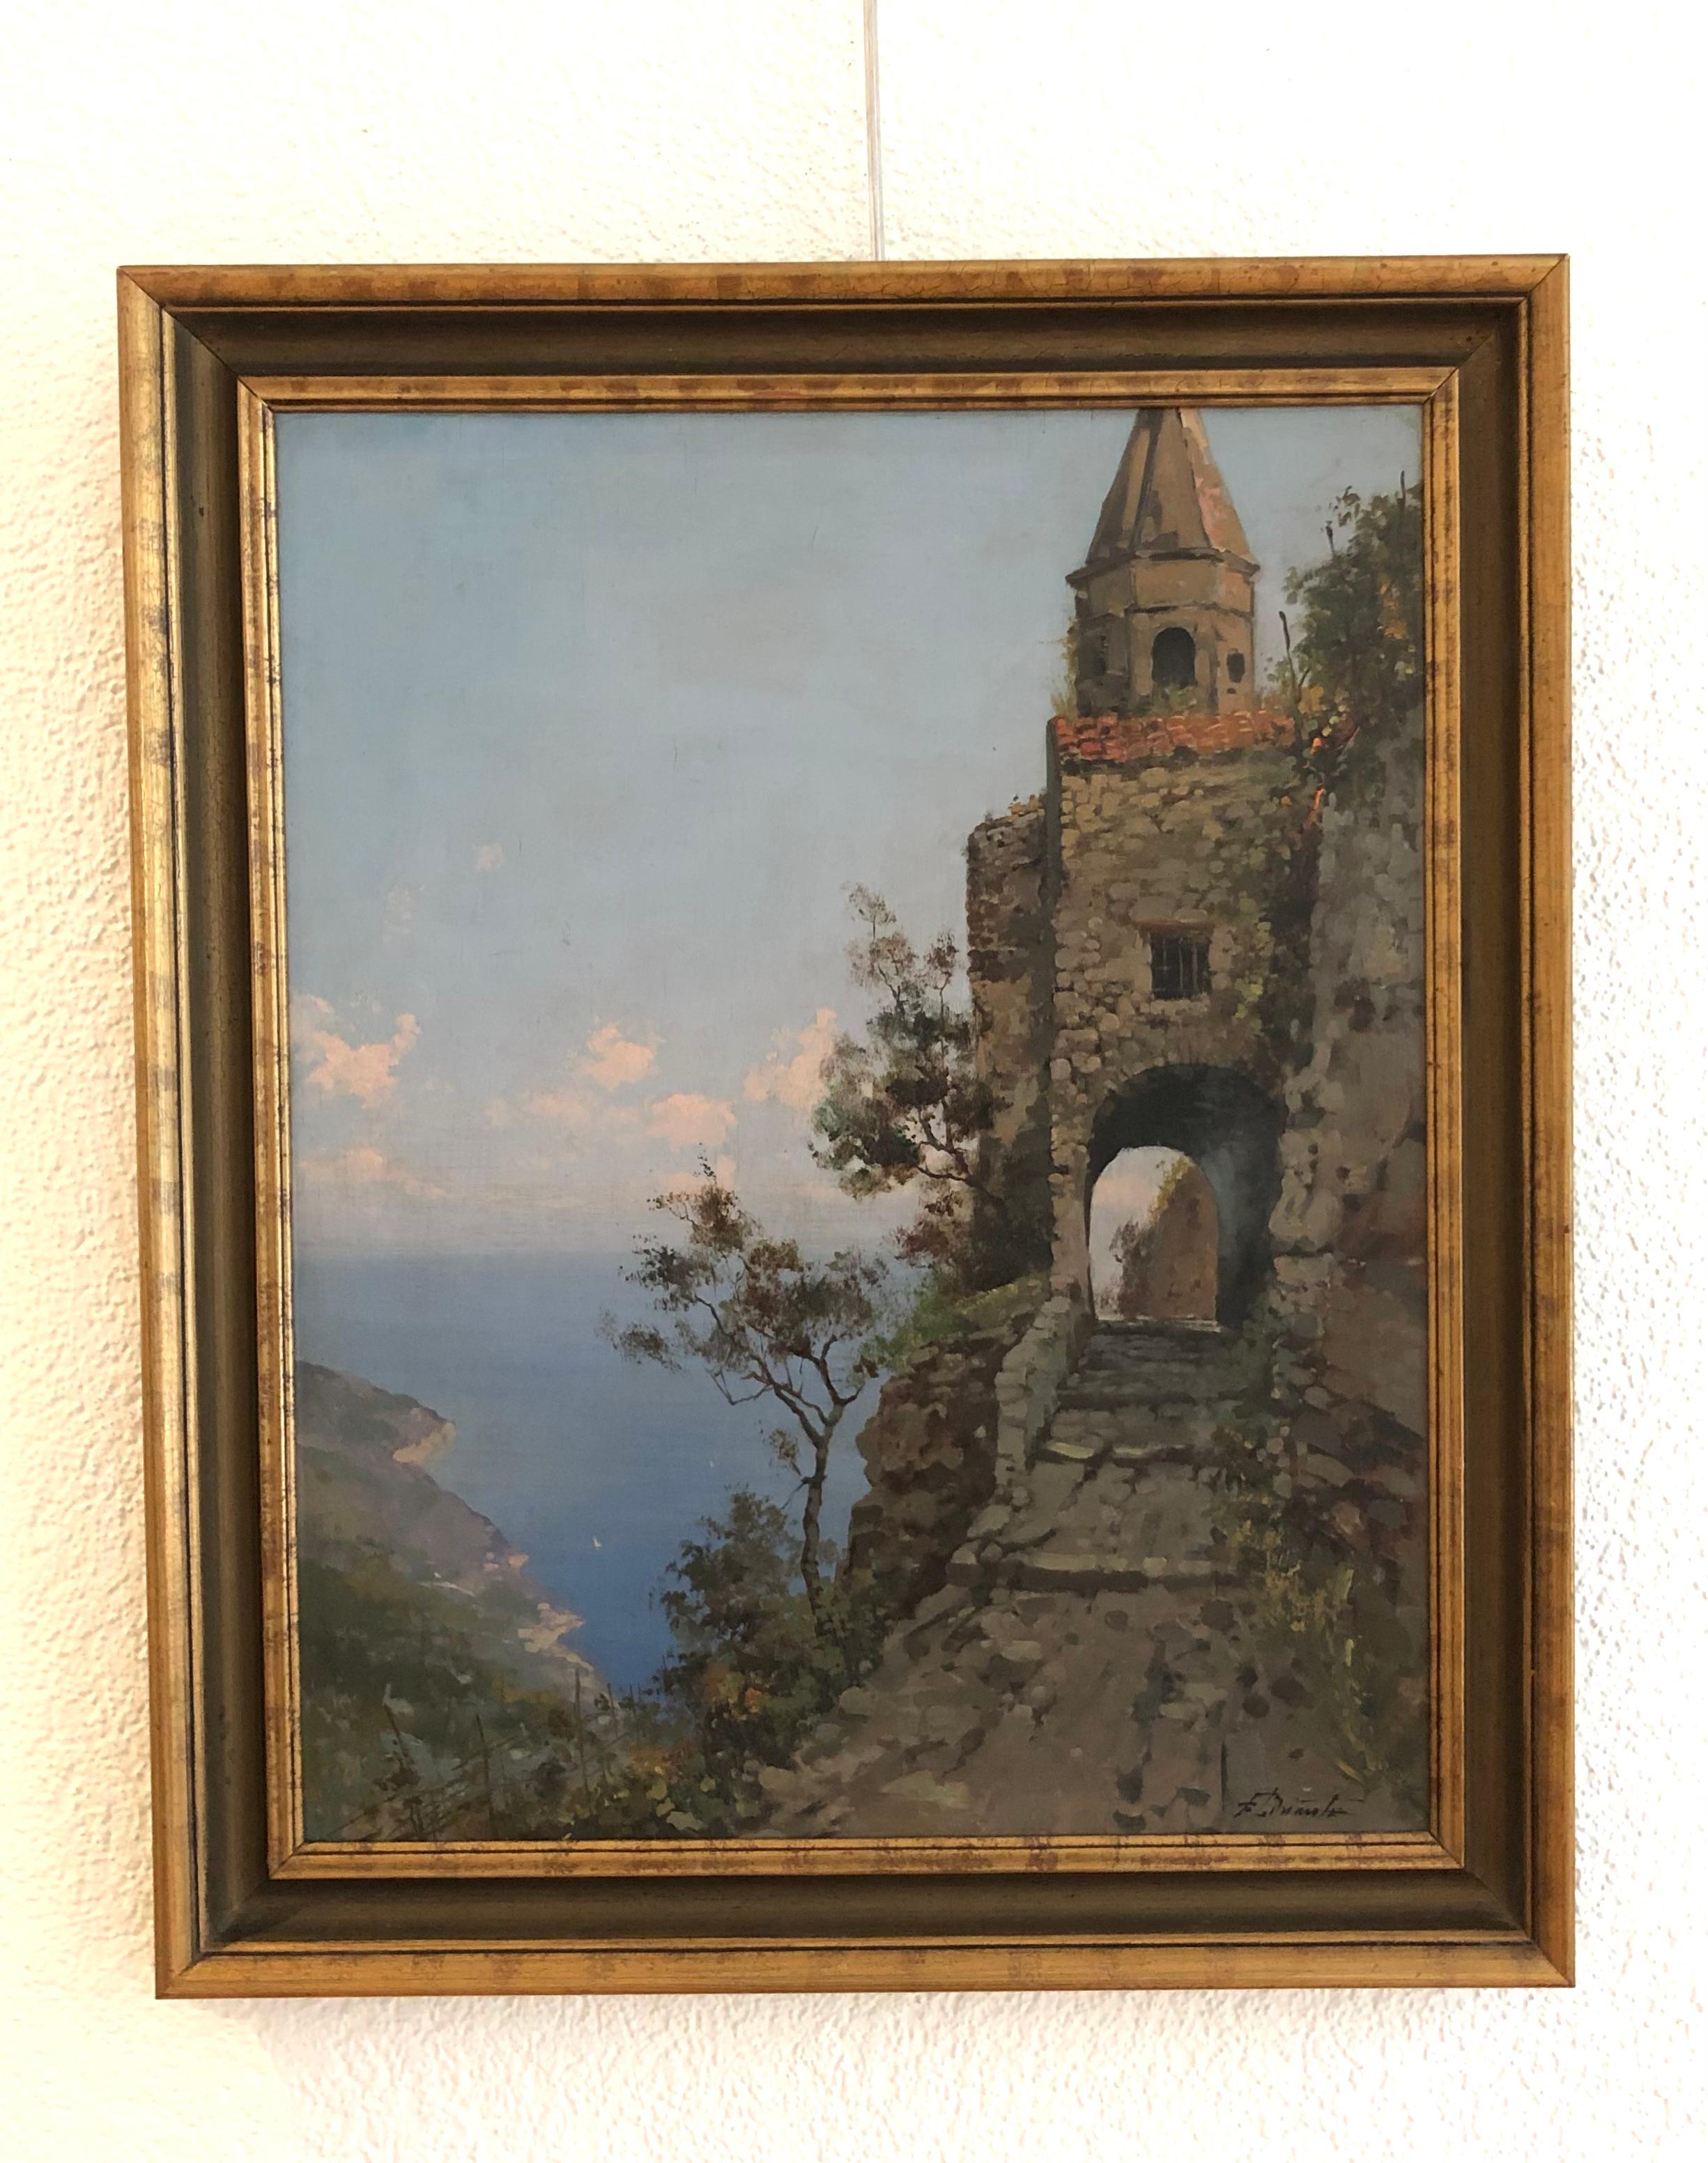 Capri - Painting by Ezelino Briante